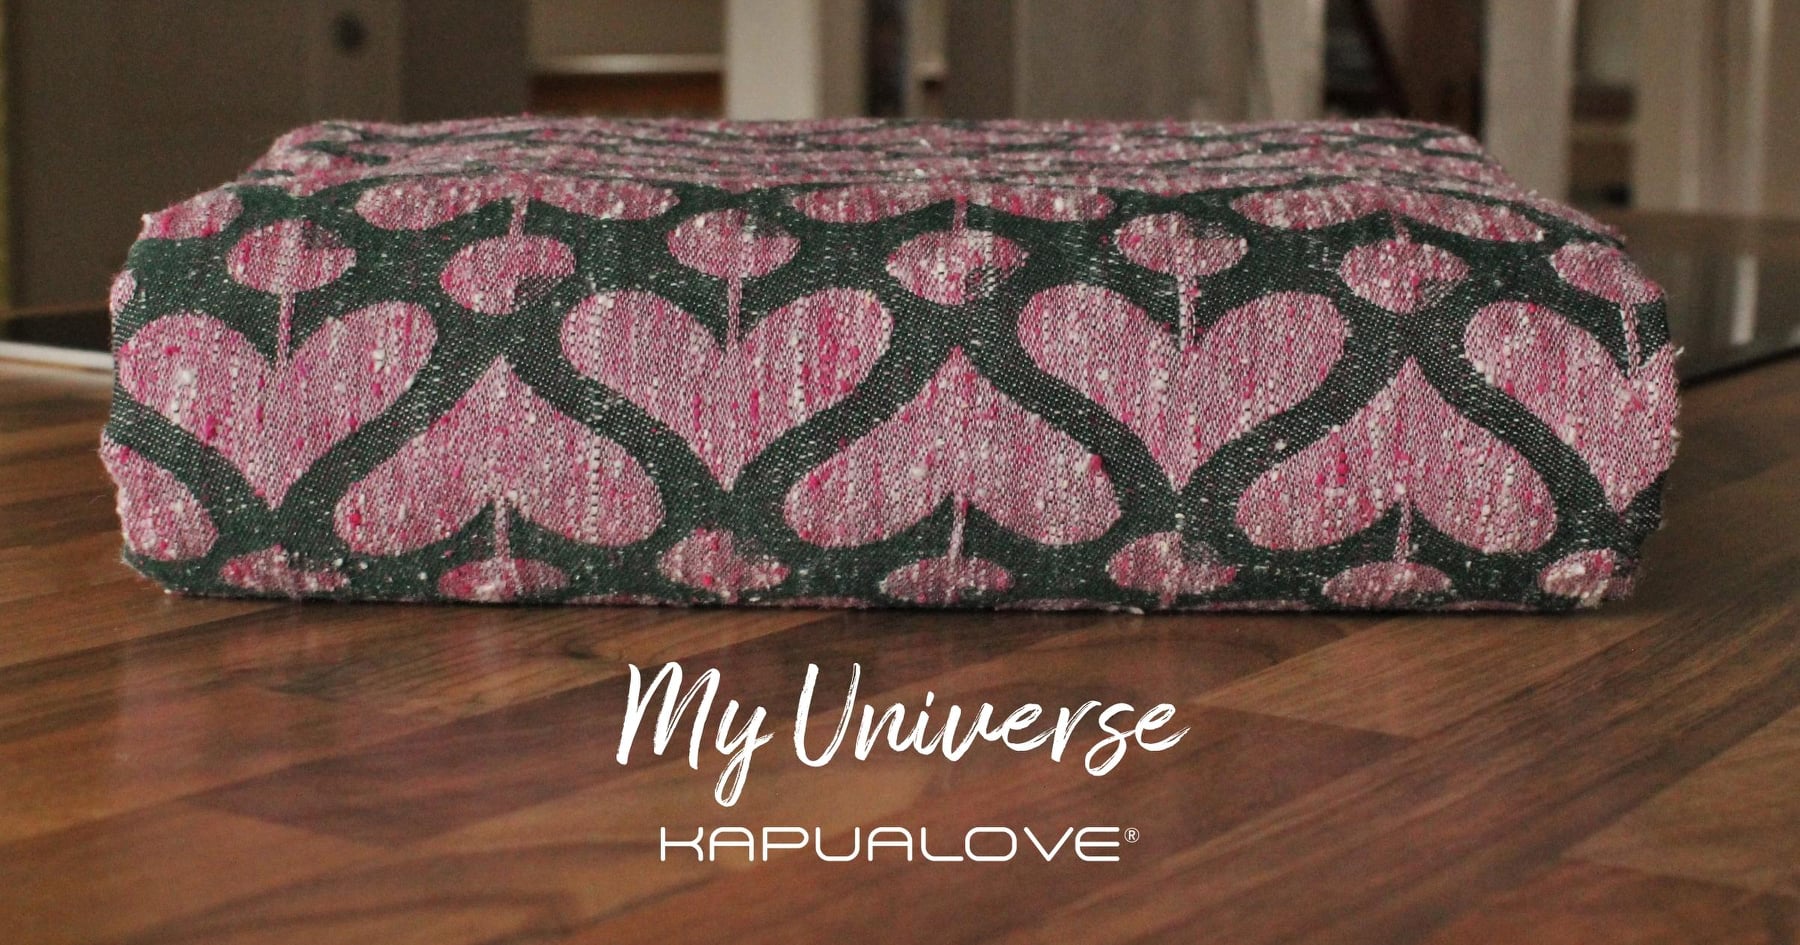 KAPUALOVE MUTTERLIEBE - My Universe Wrap (tussah) Image